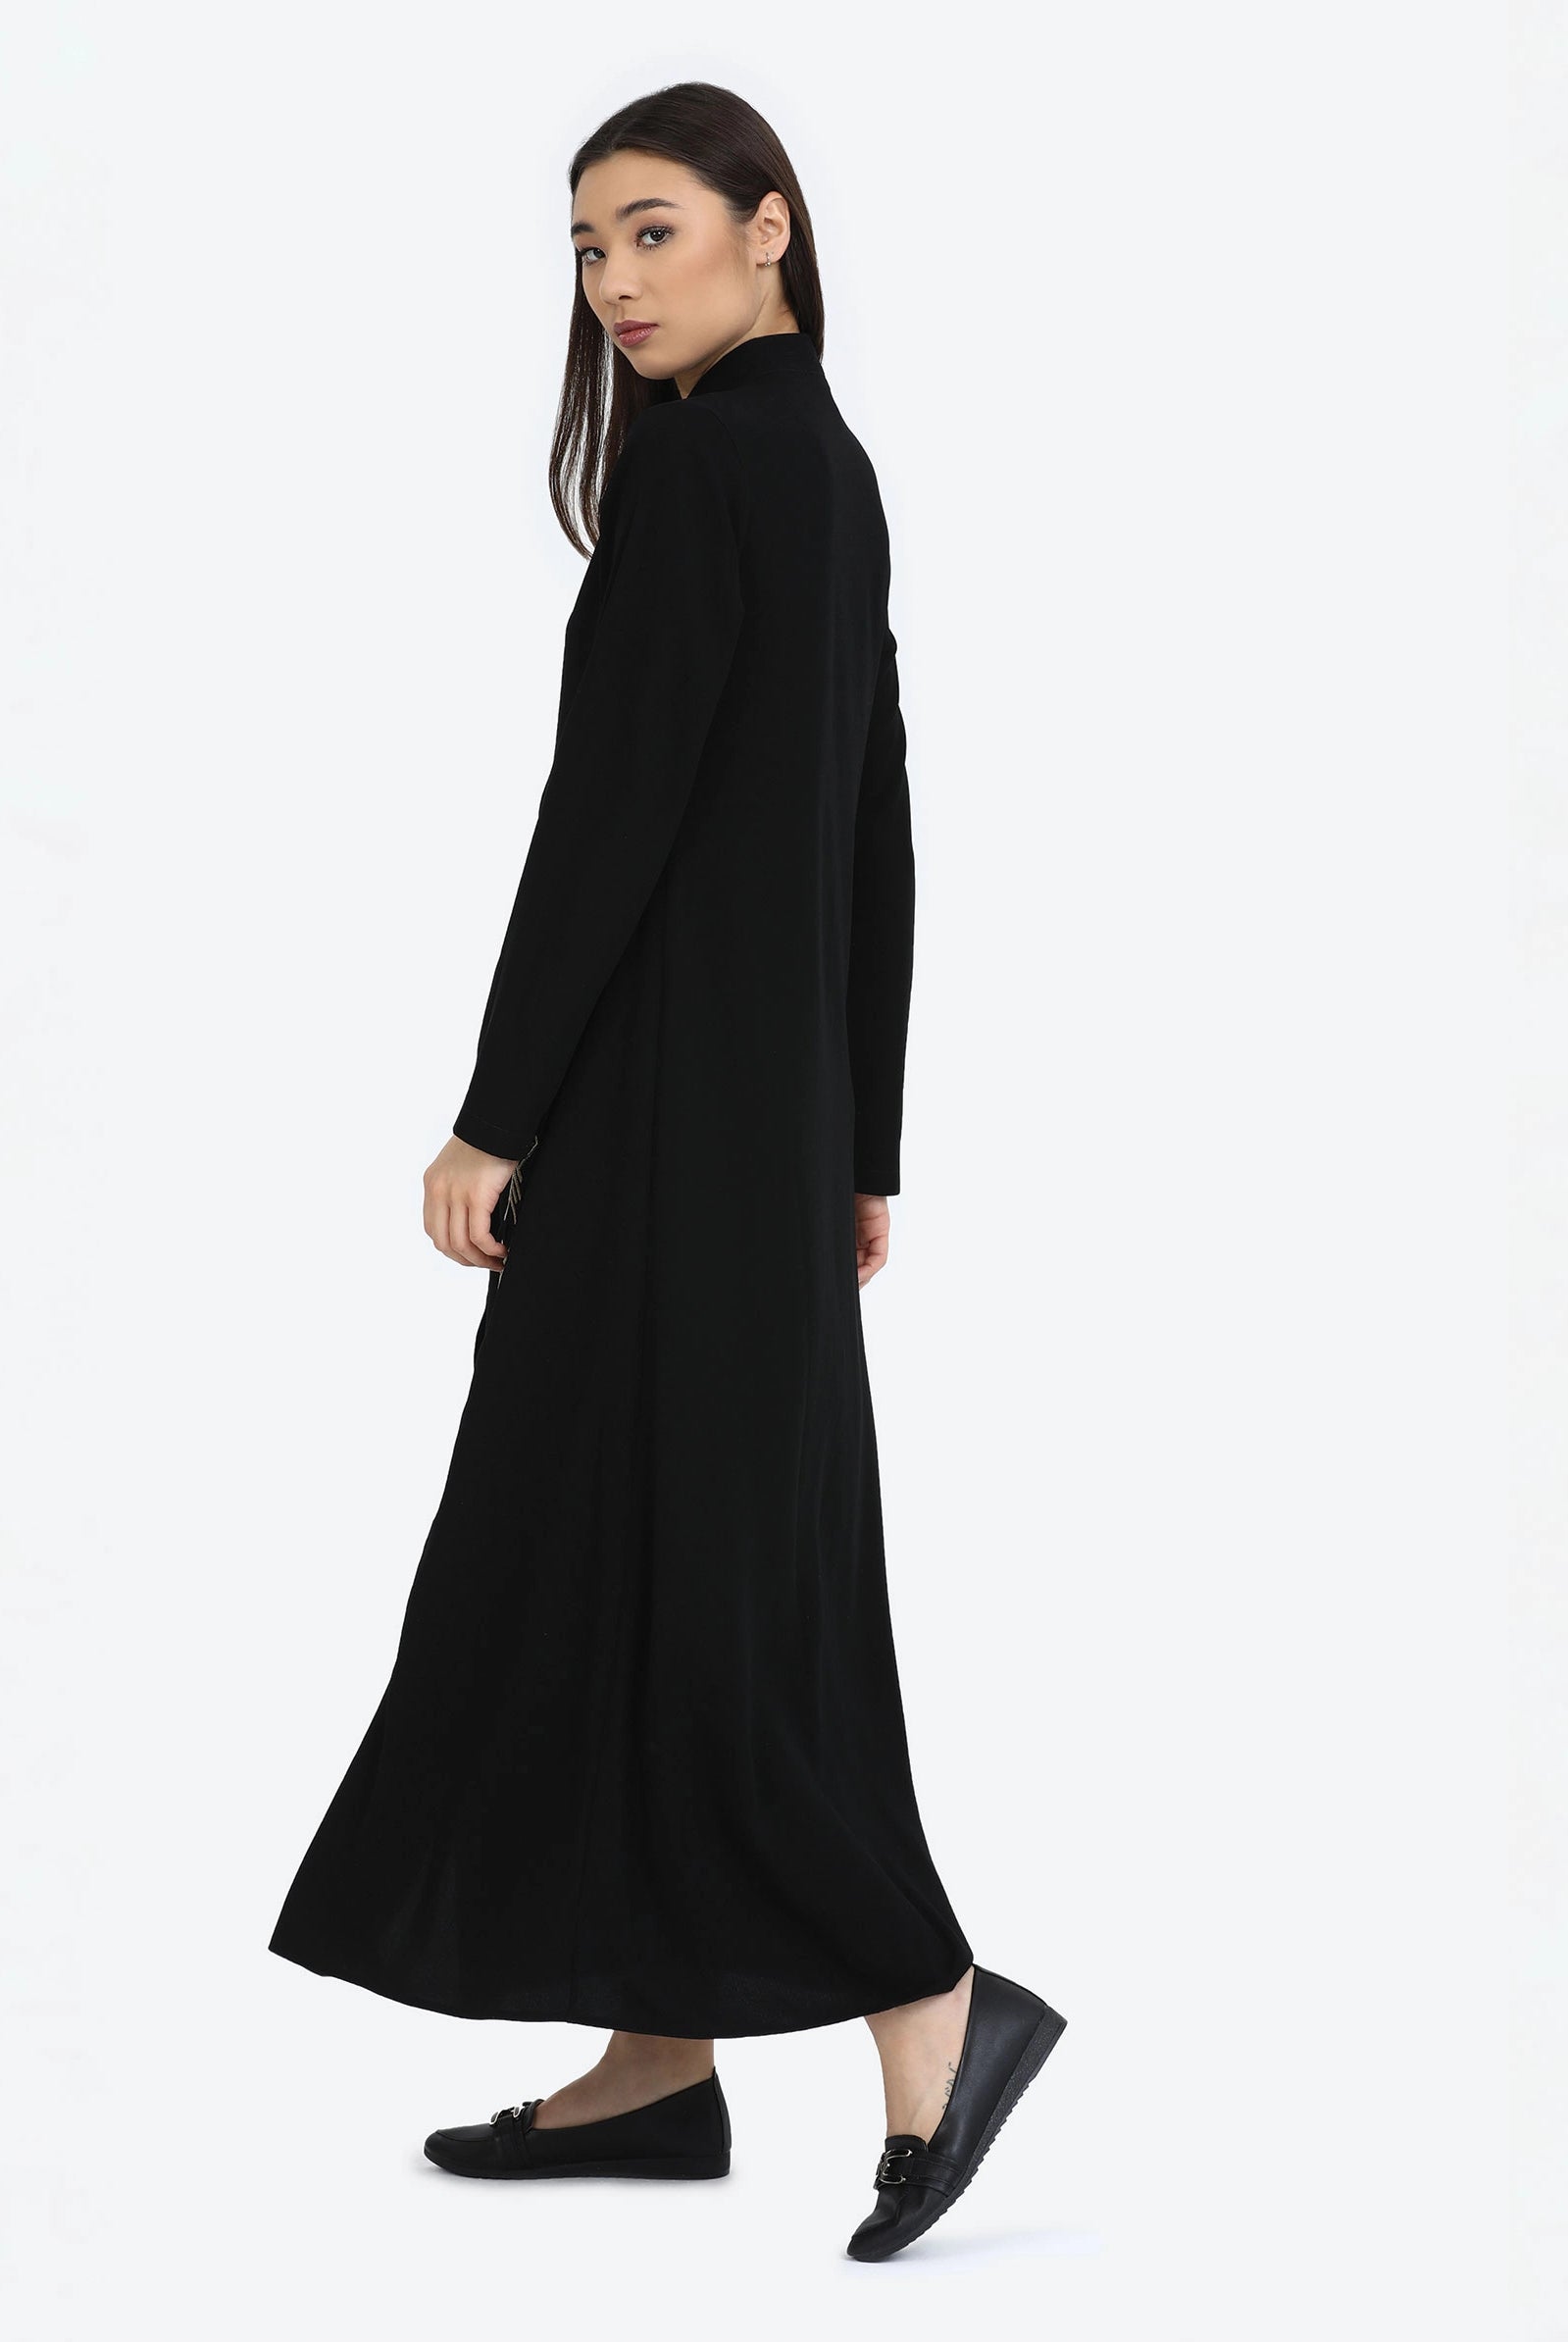 black abaya with embroidery